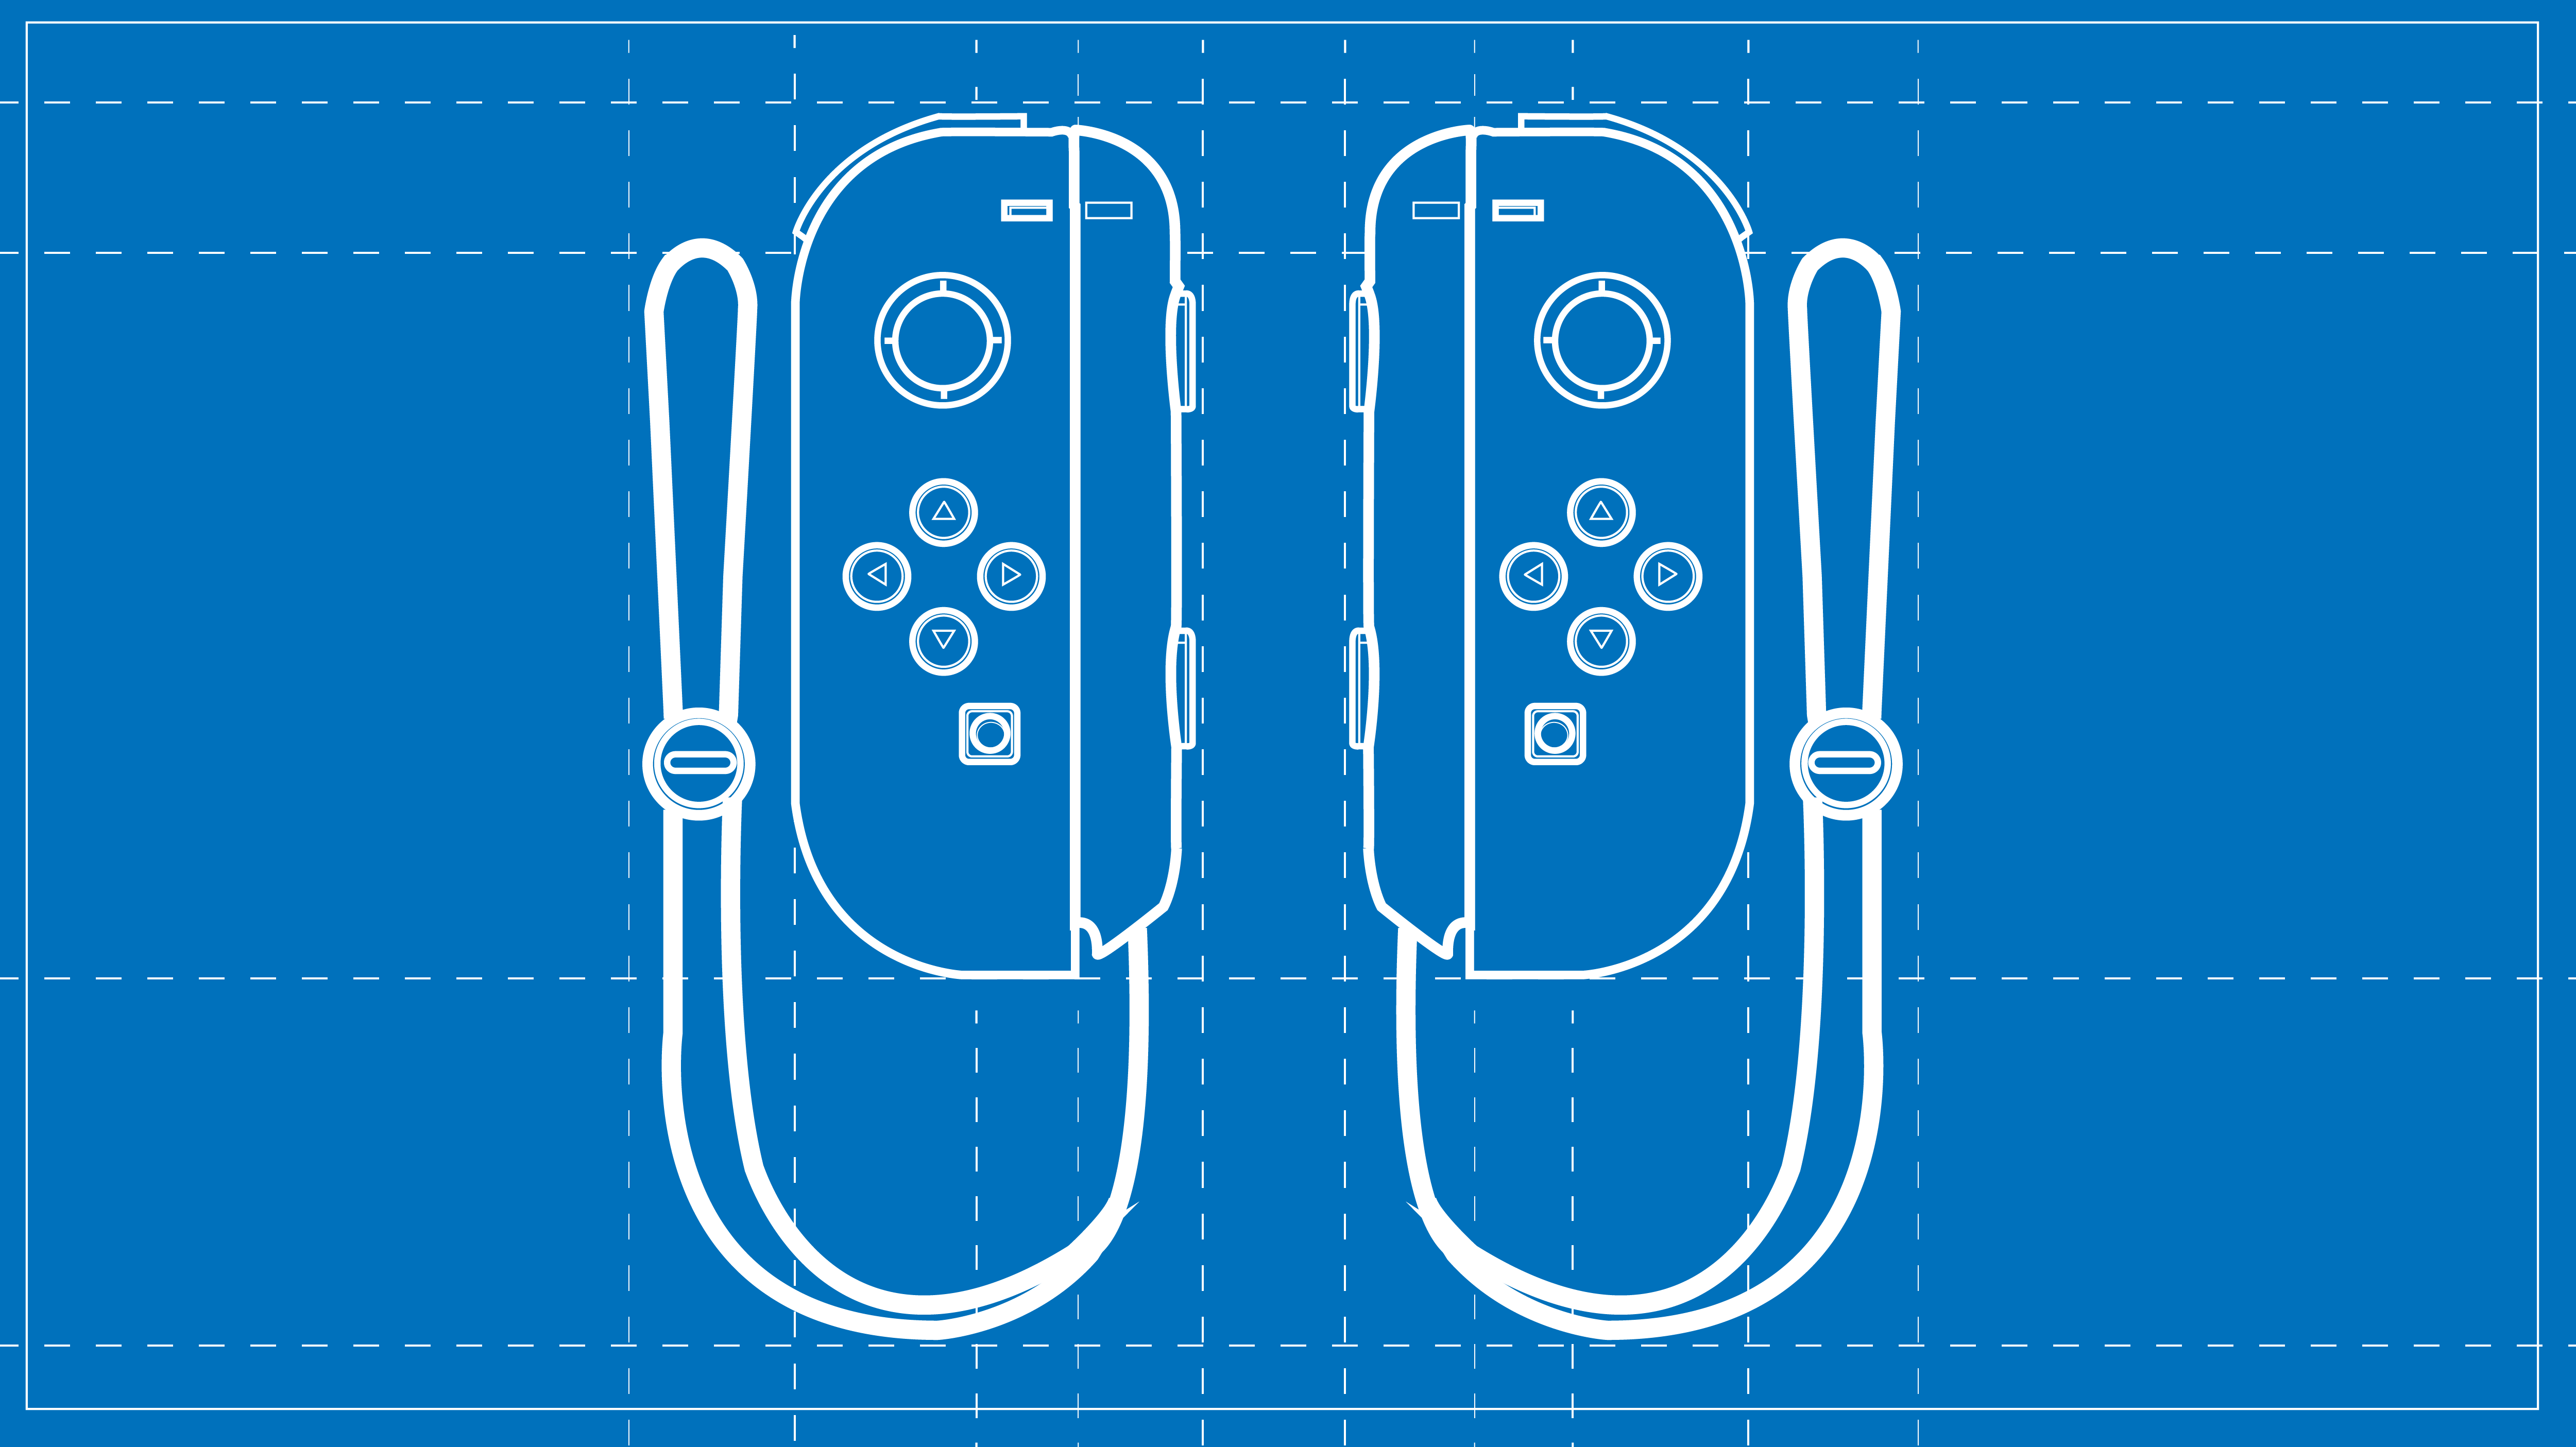 Blueprint illustration of Nintendo Switch